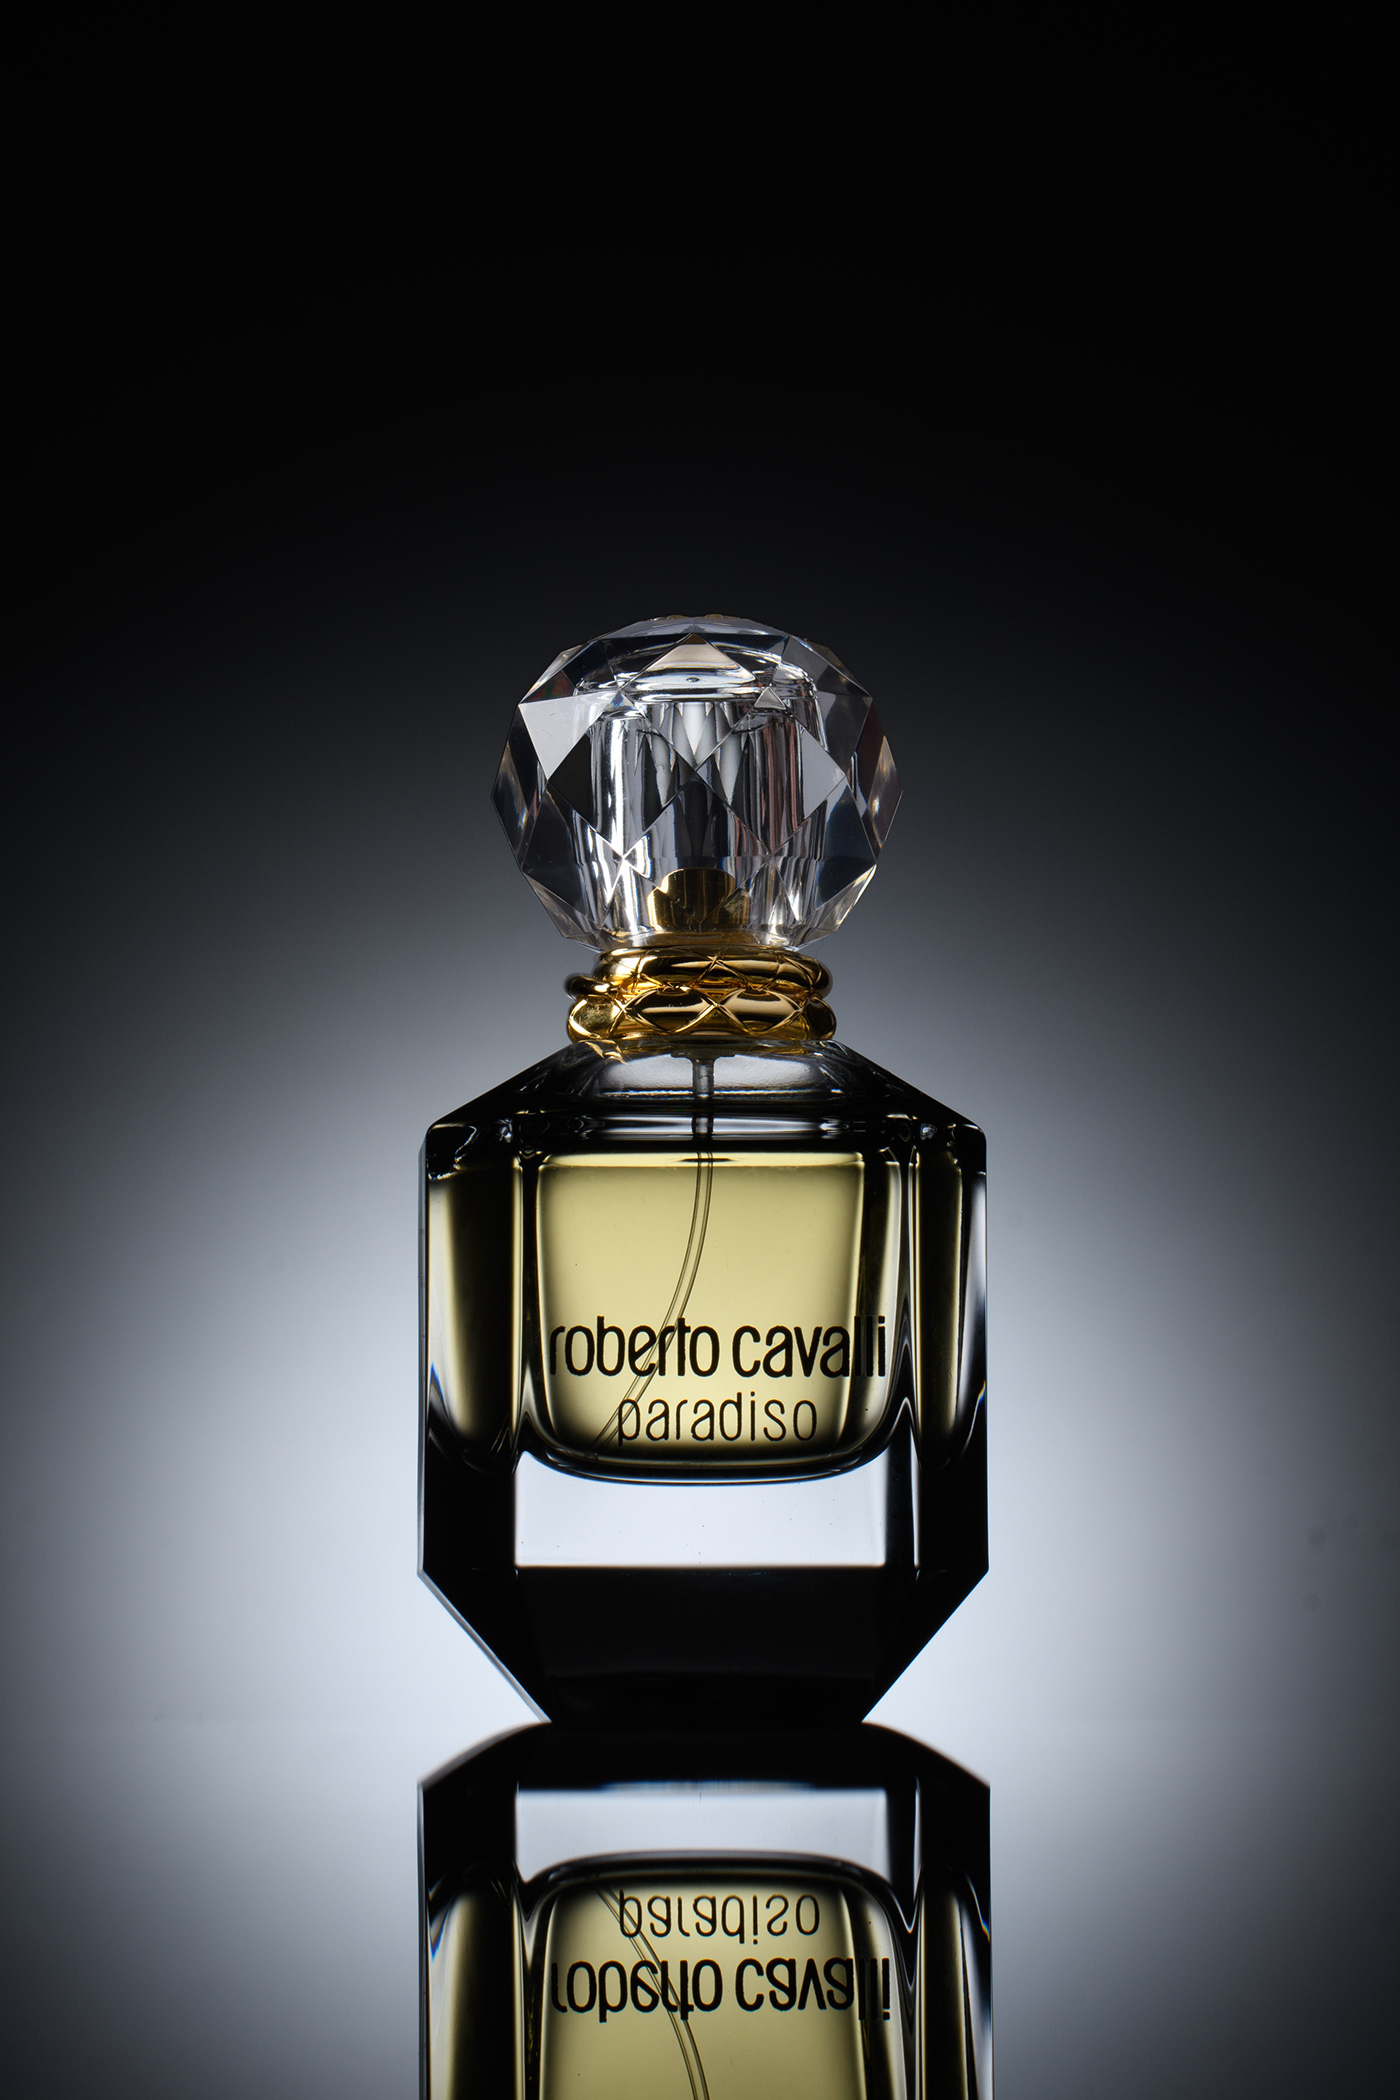 parfume product photo bottle studio light caustic glossy glass